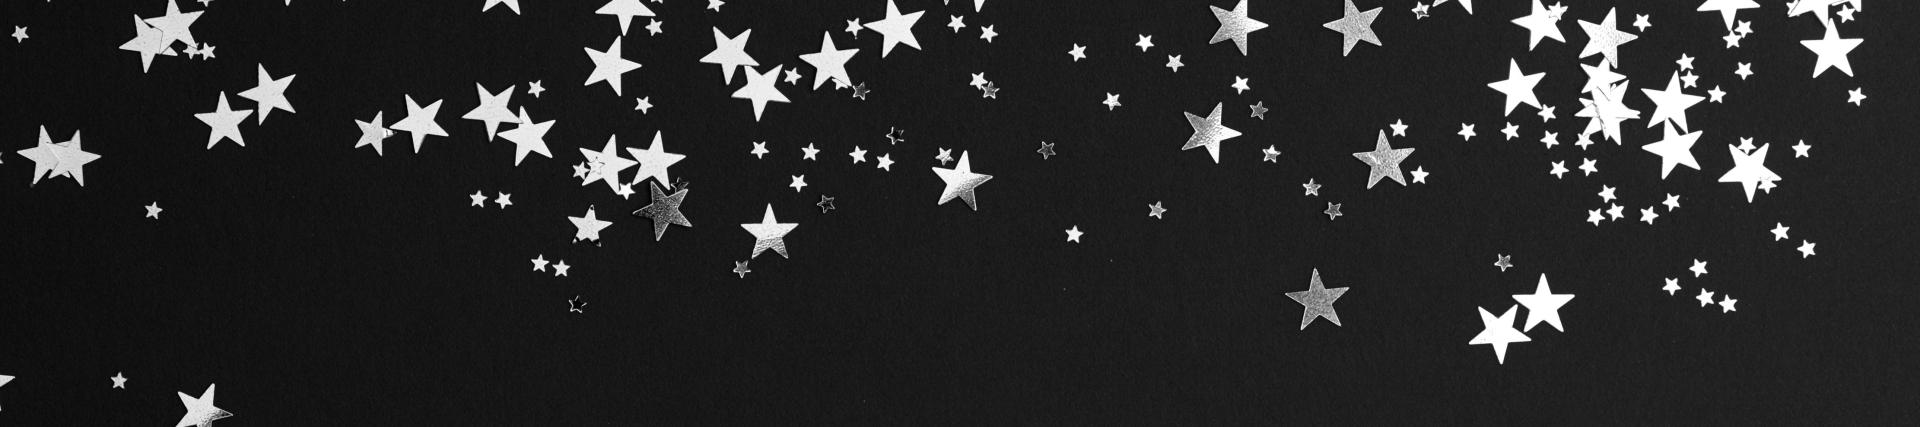 Silver star confetti on a black background.